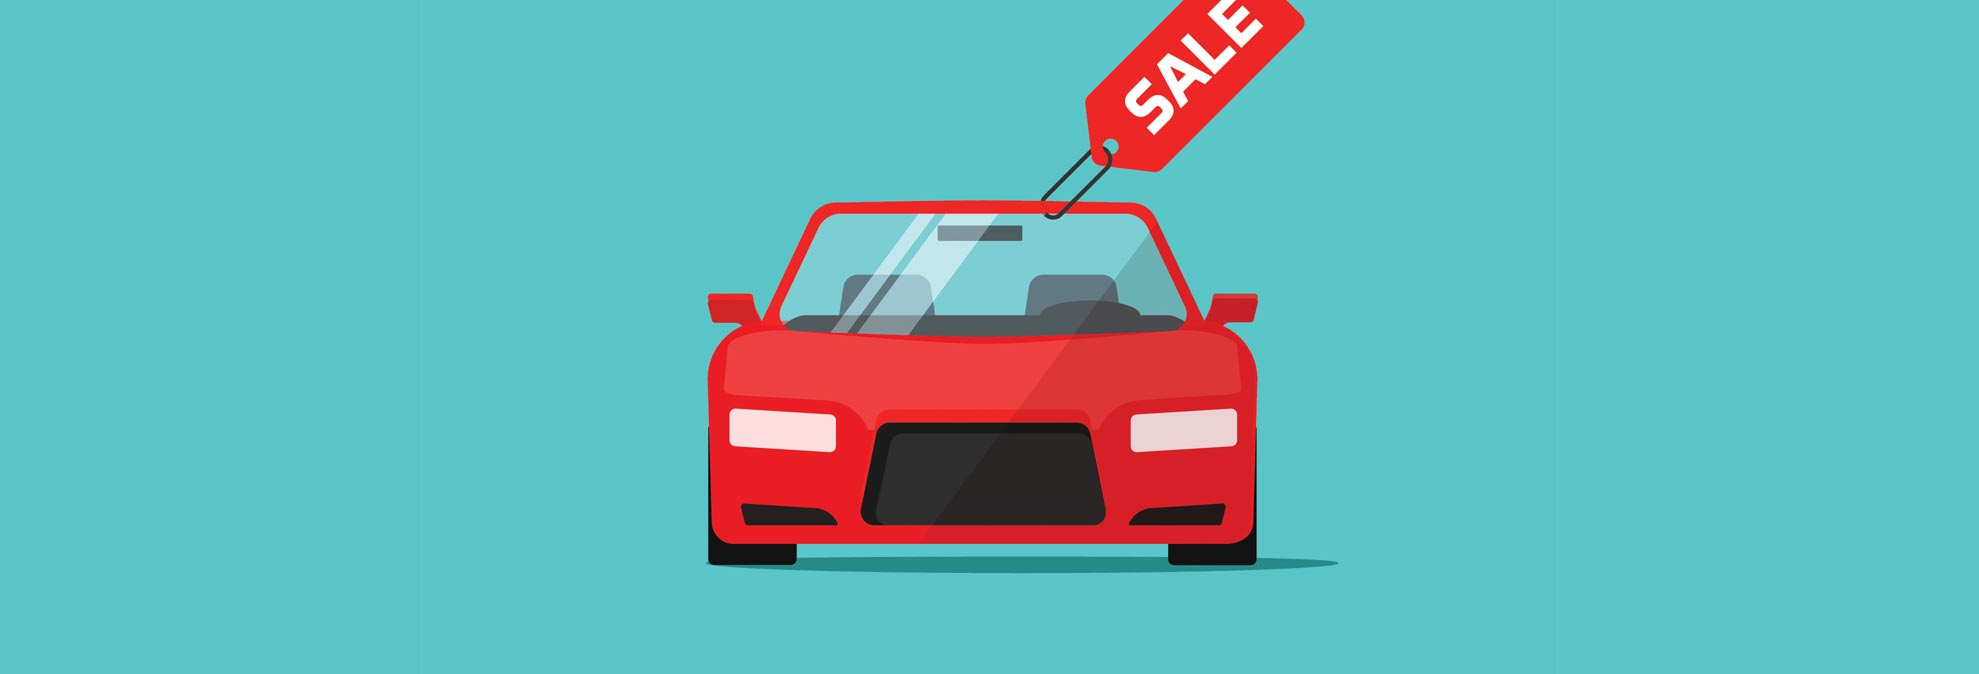 Purchasing Online Automobile Components